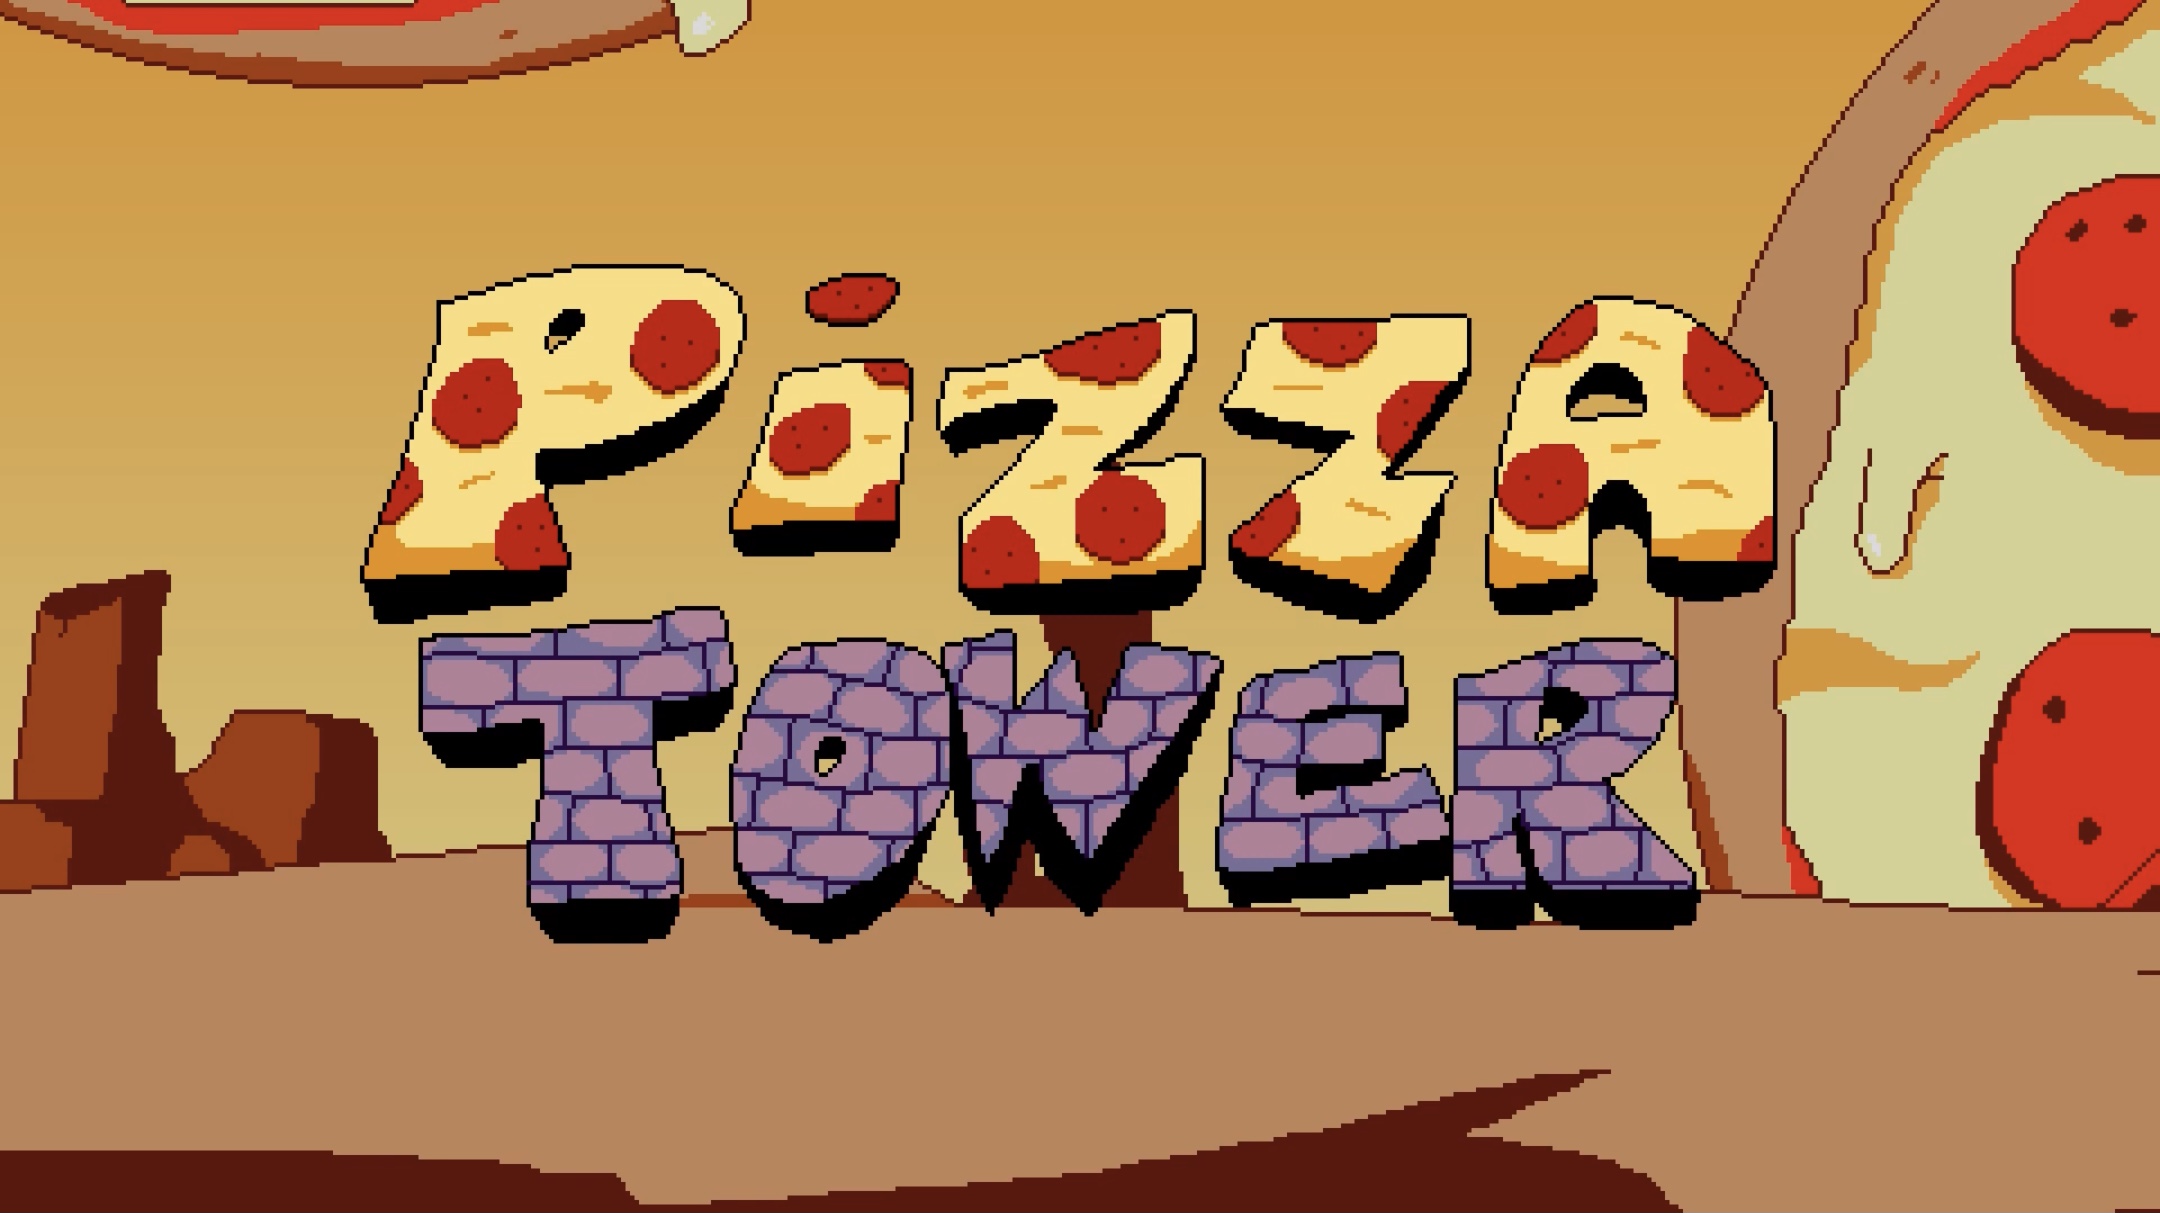 Пицца тавер 1.1. Пизза тавэр. Pizza Tower игра. Игрушки пицца ТАВЕР. Пицца башня.